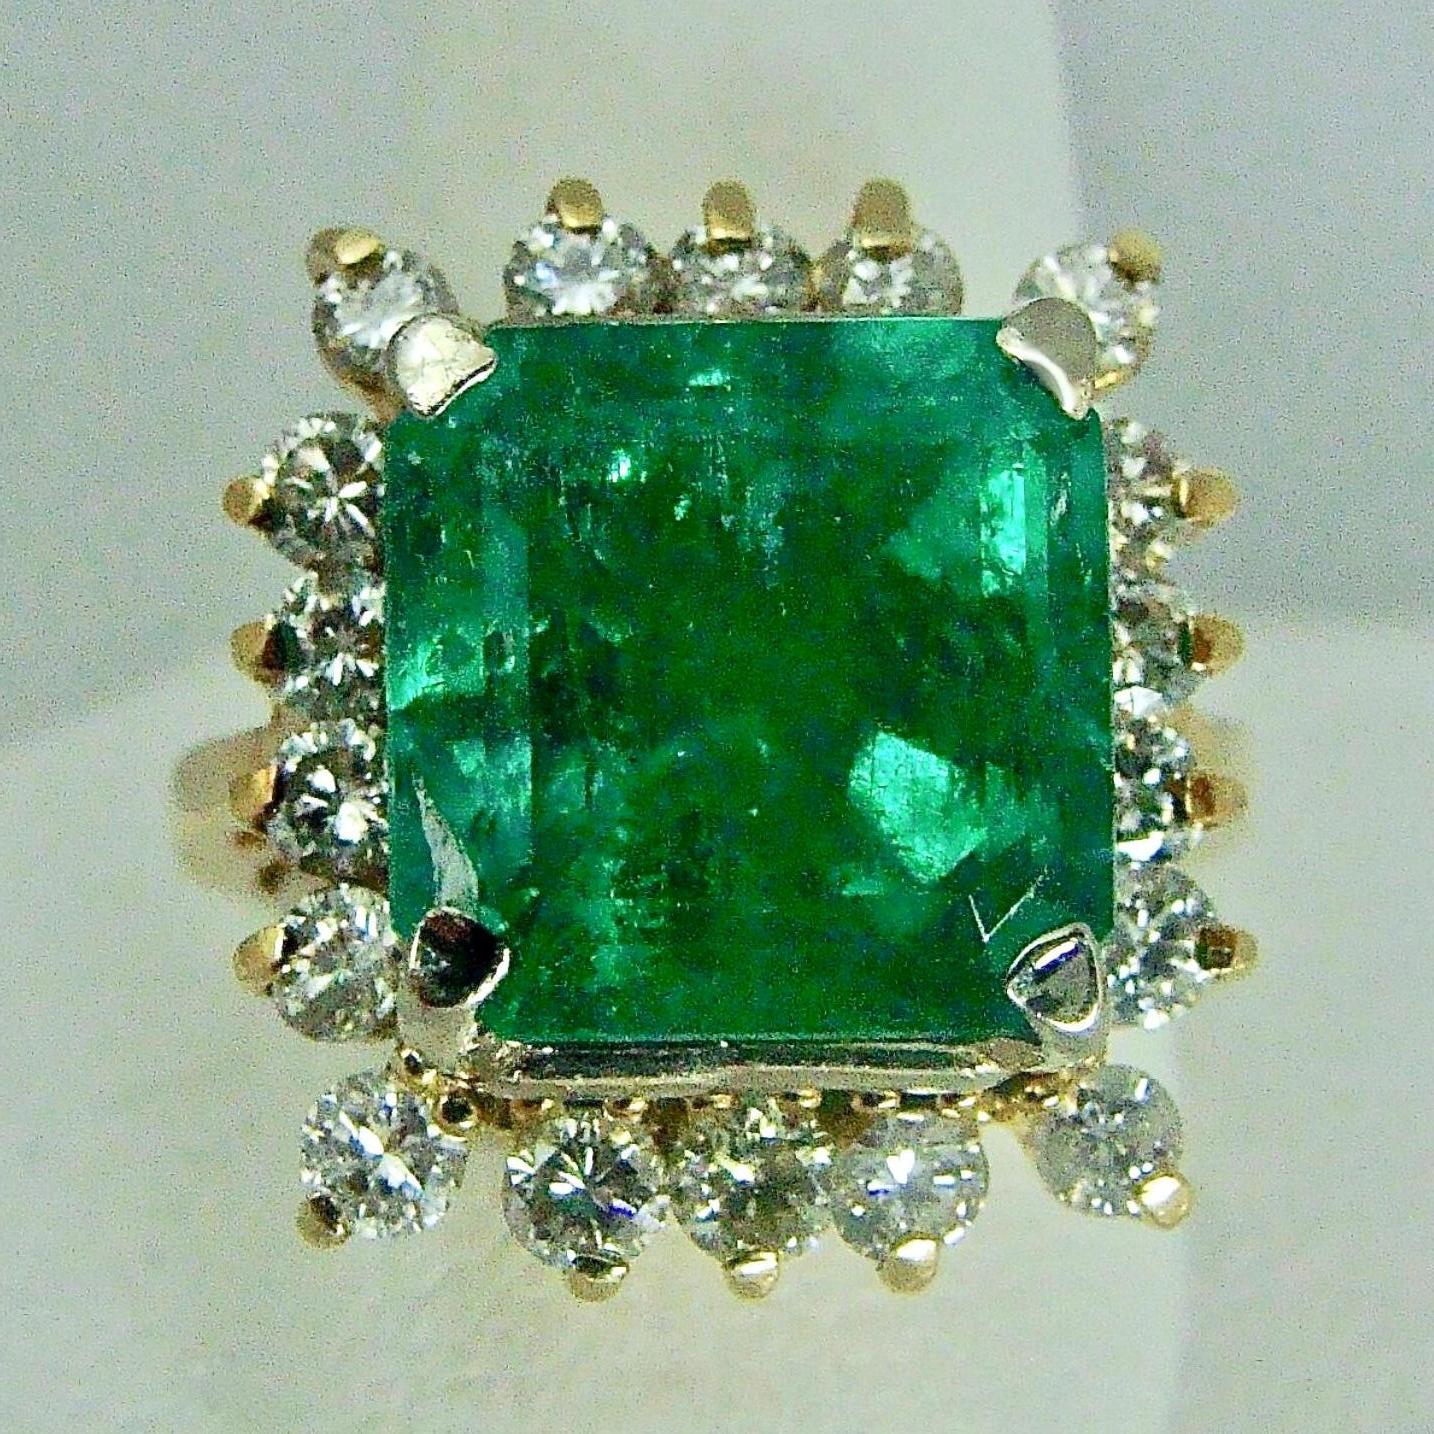 6 carat emerald ring